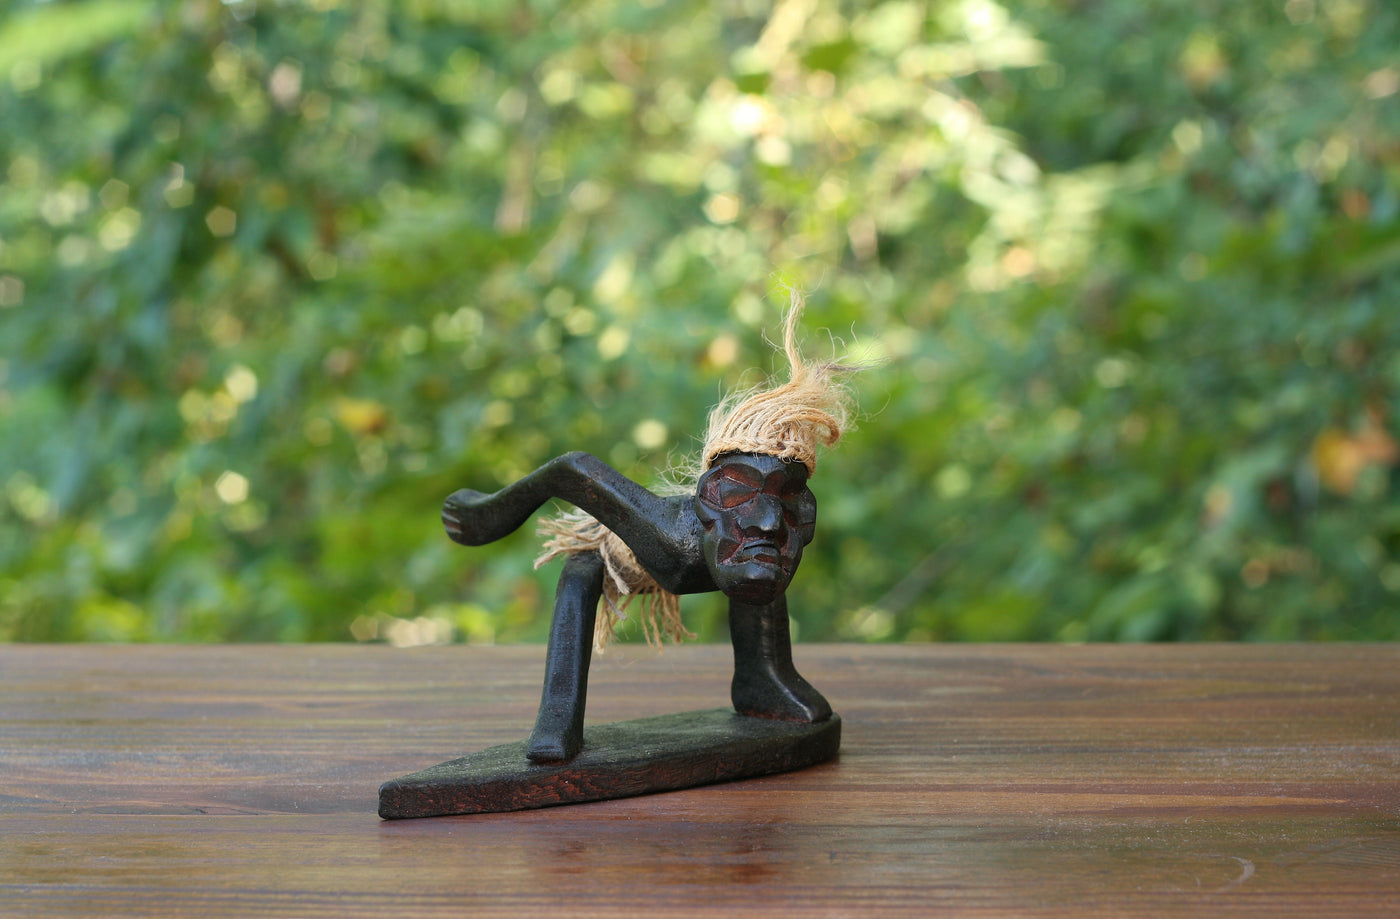 Handmade Wooden Primitive Tribal Funny Statue Surfing Sculpture Tiki Bar Figurine Hand Carved Surf